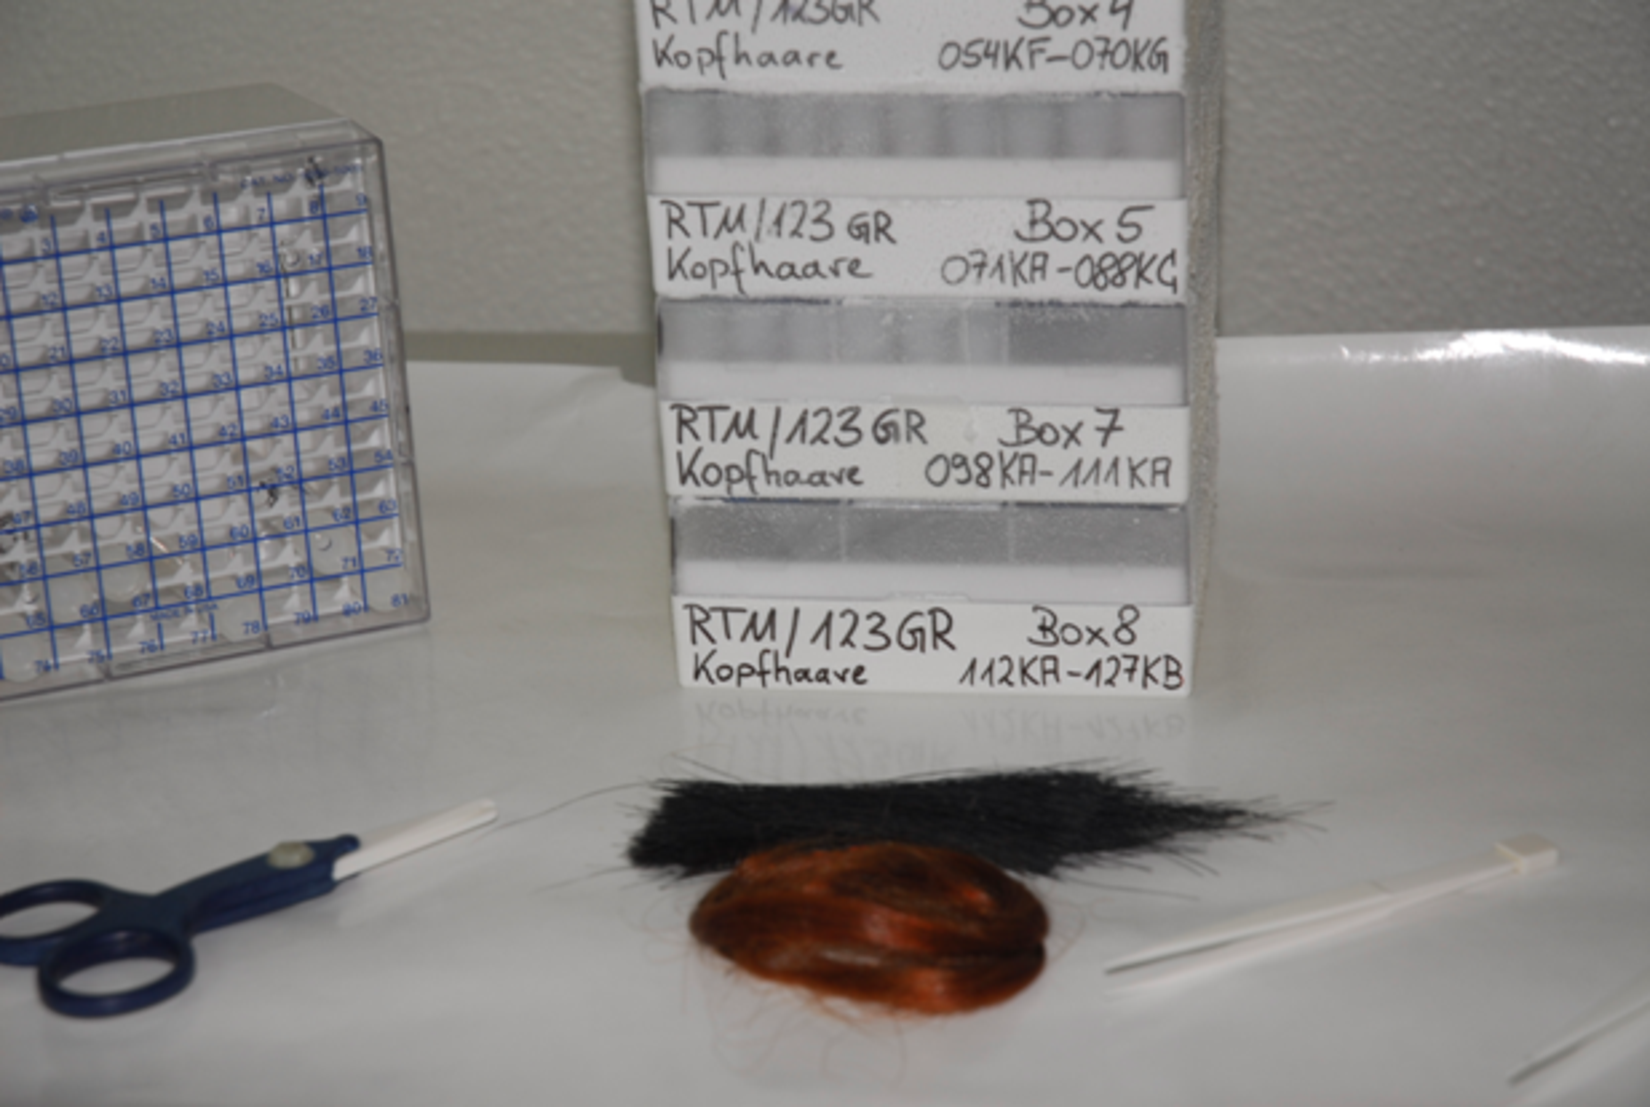 Scalp hair sample